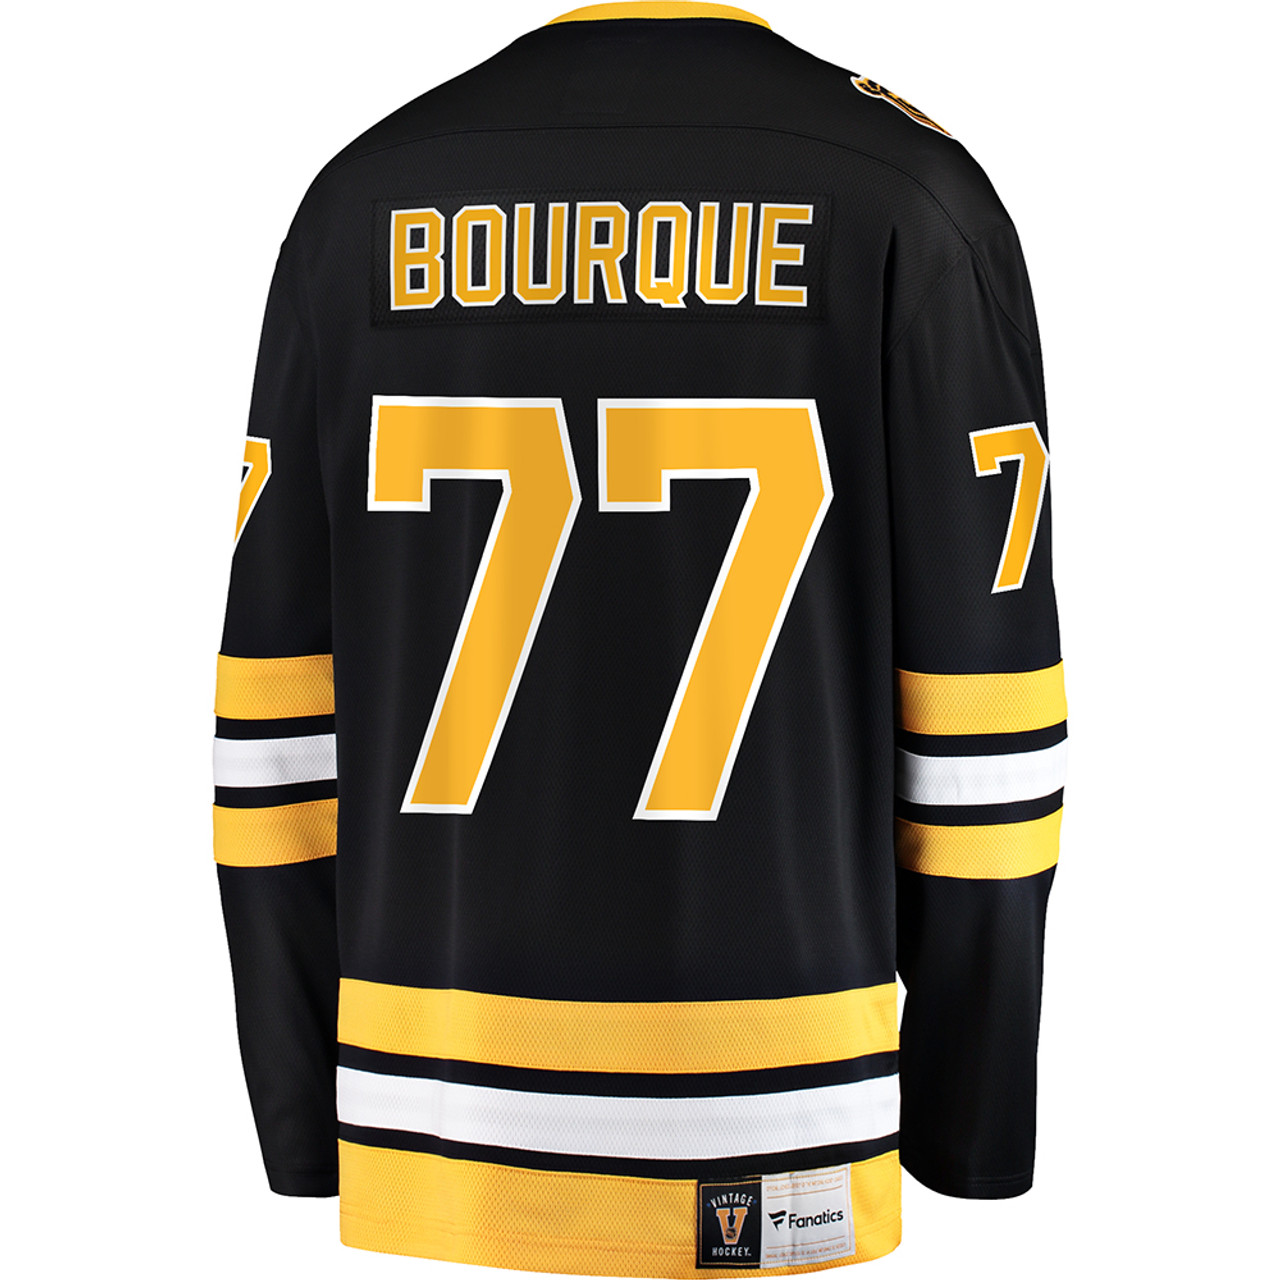 Ray Bourque Boston Bruins Fanatics Authentic Autographed White